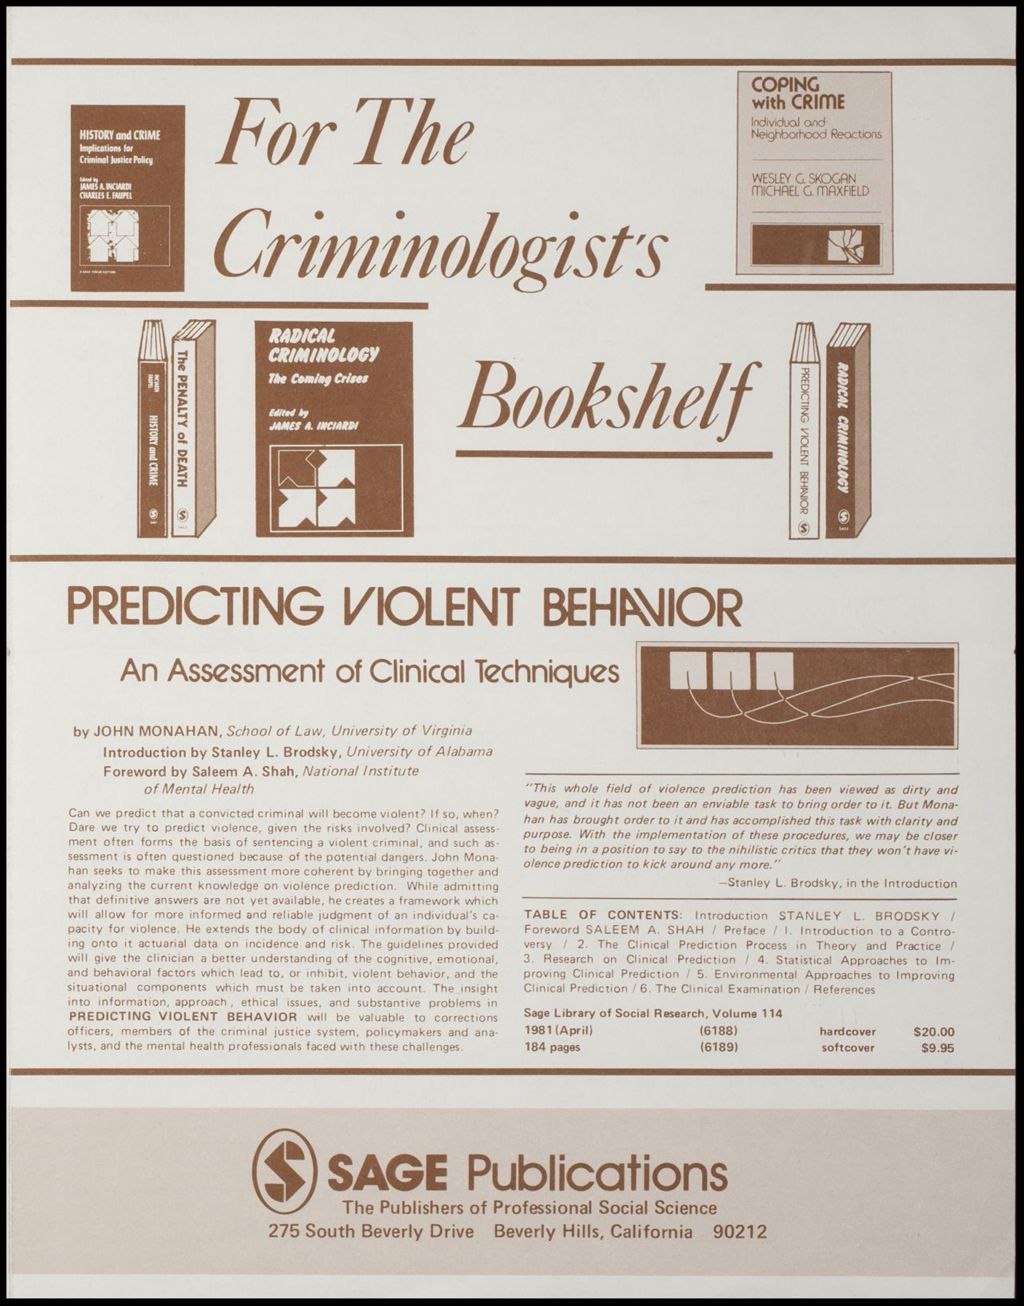 Criminal Justice, 1980 (Folder III-1956)